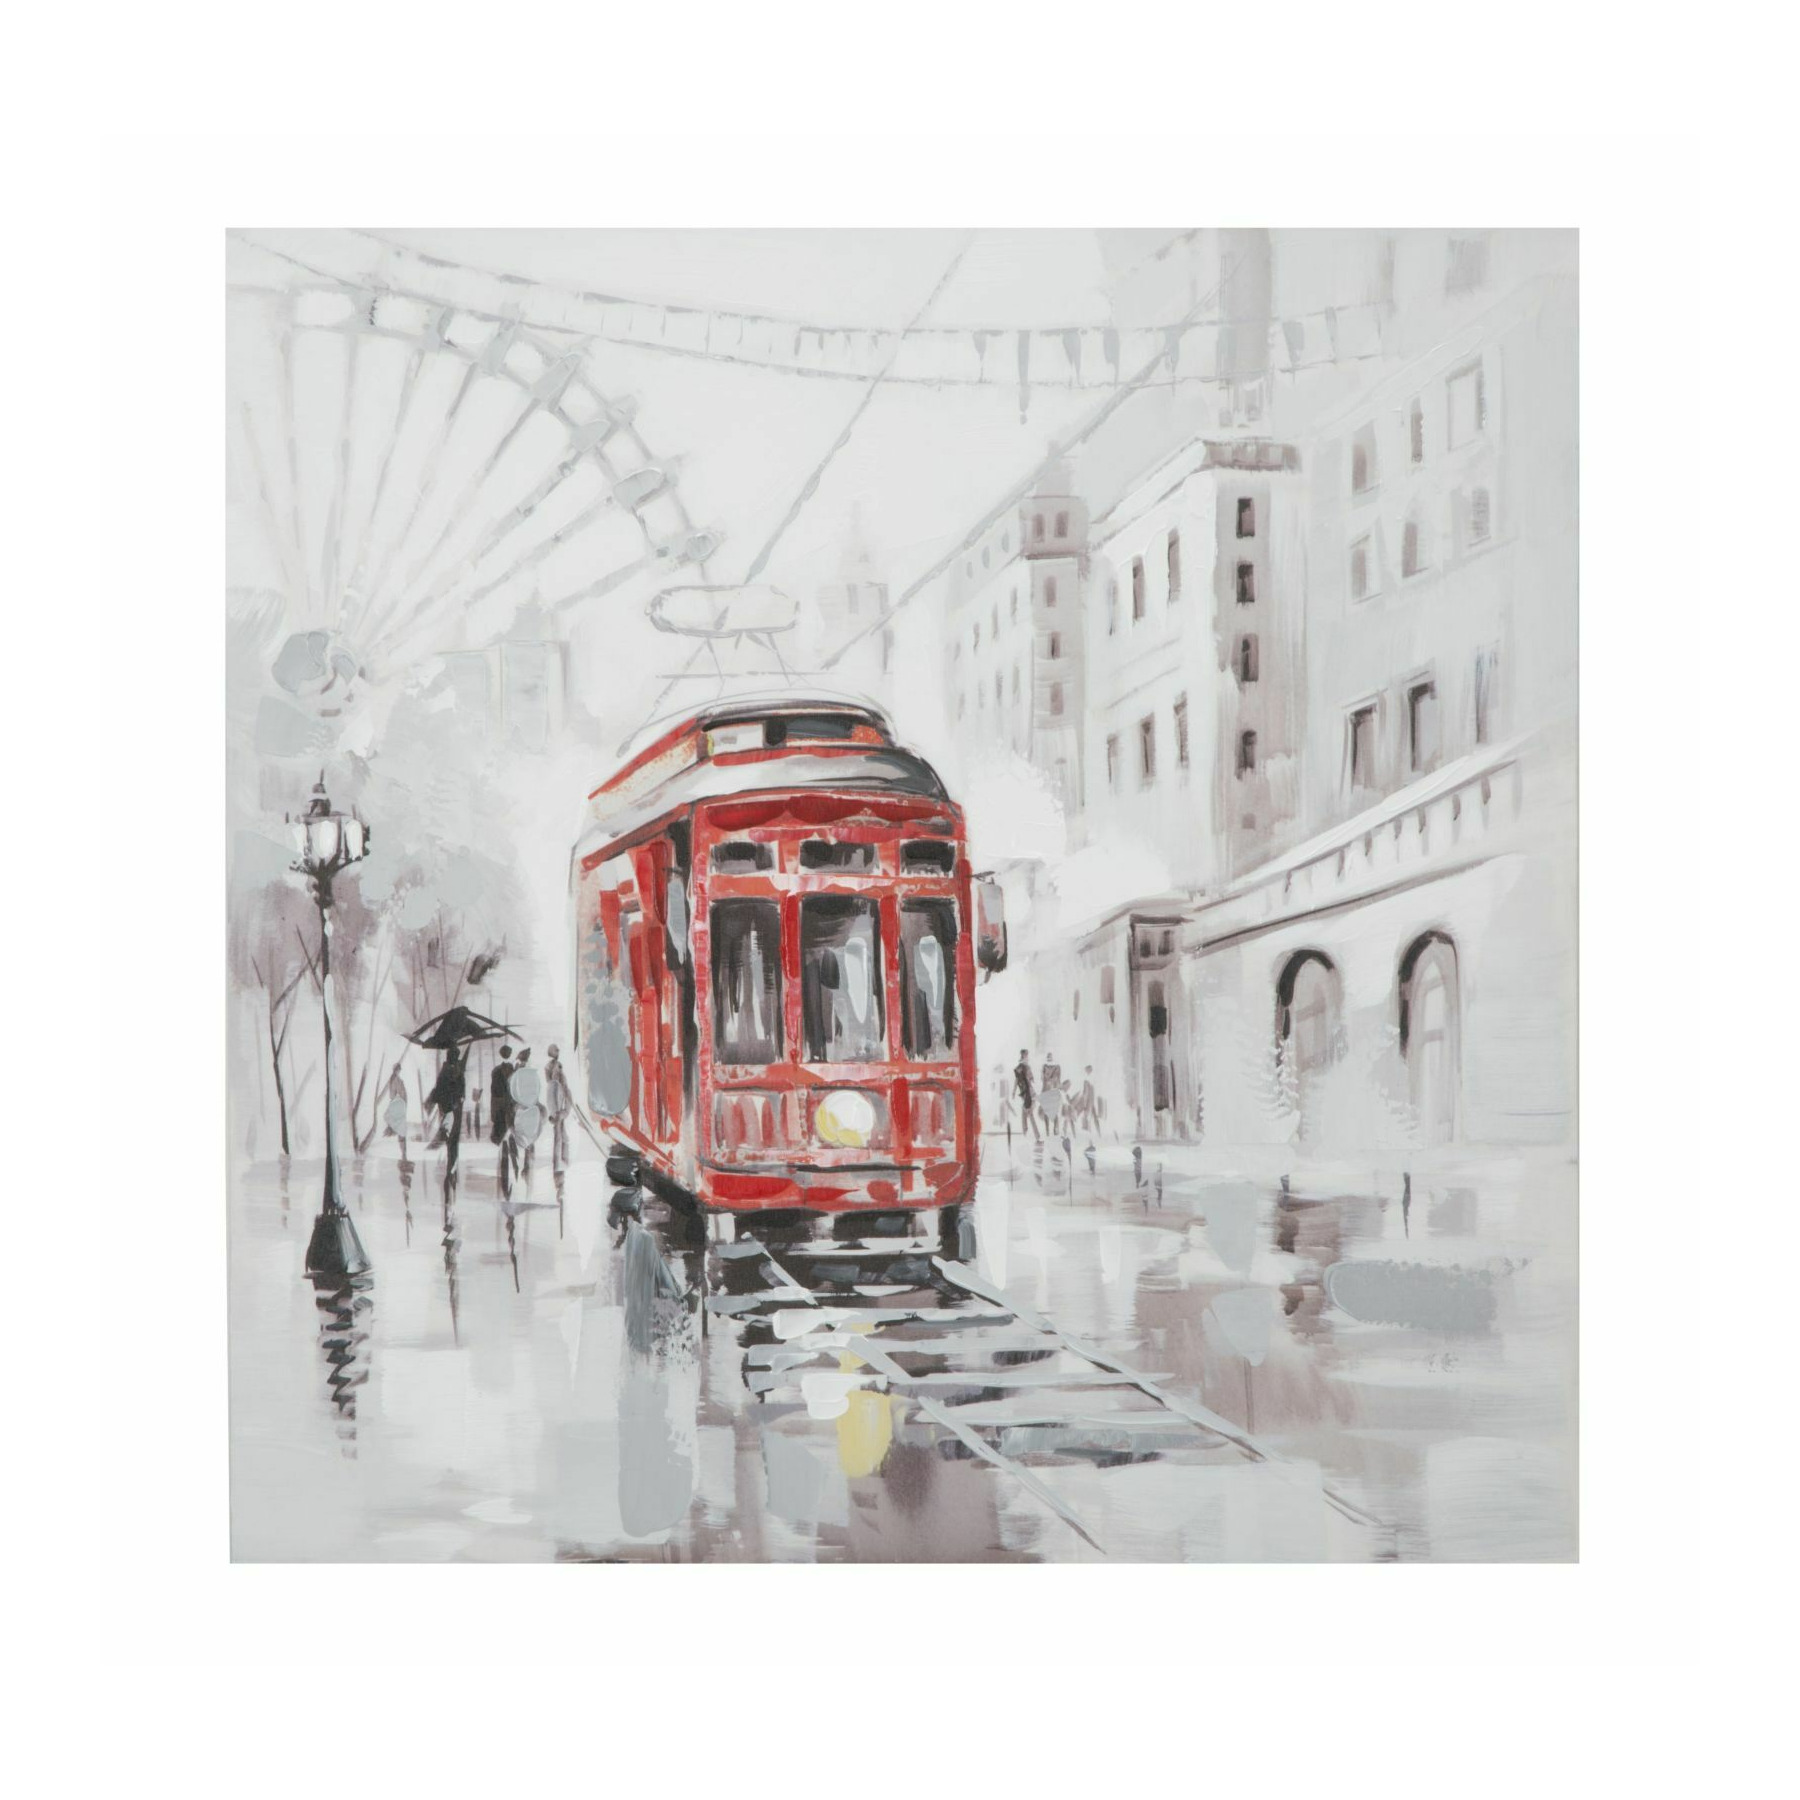 Tablou cu tren, Roma1121, Multicolor, Lemn de brad si Canvas, 80x80x3 cm